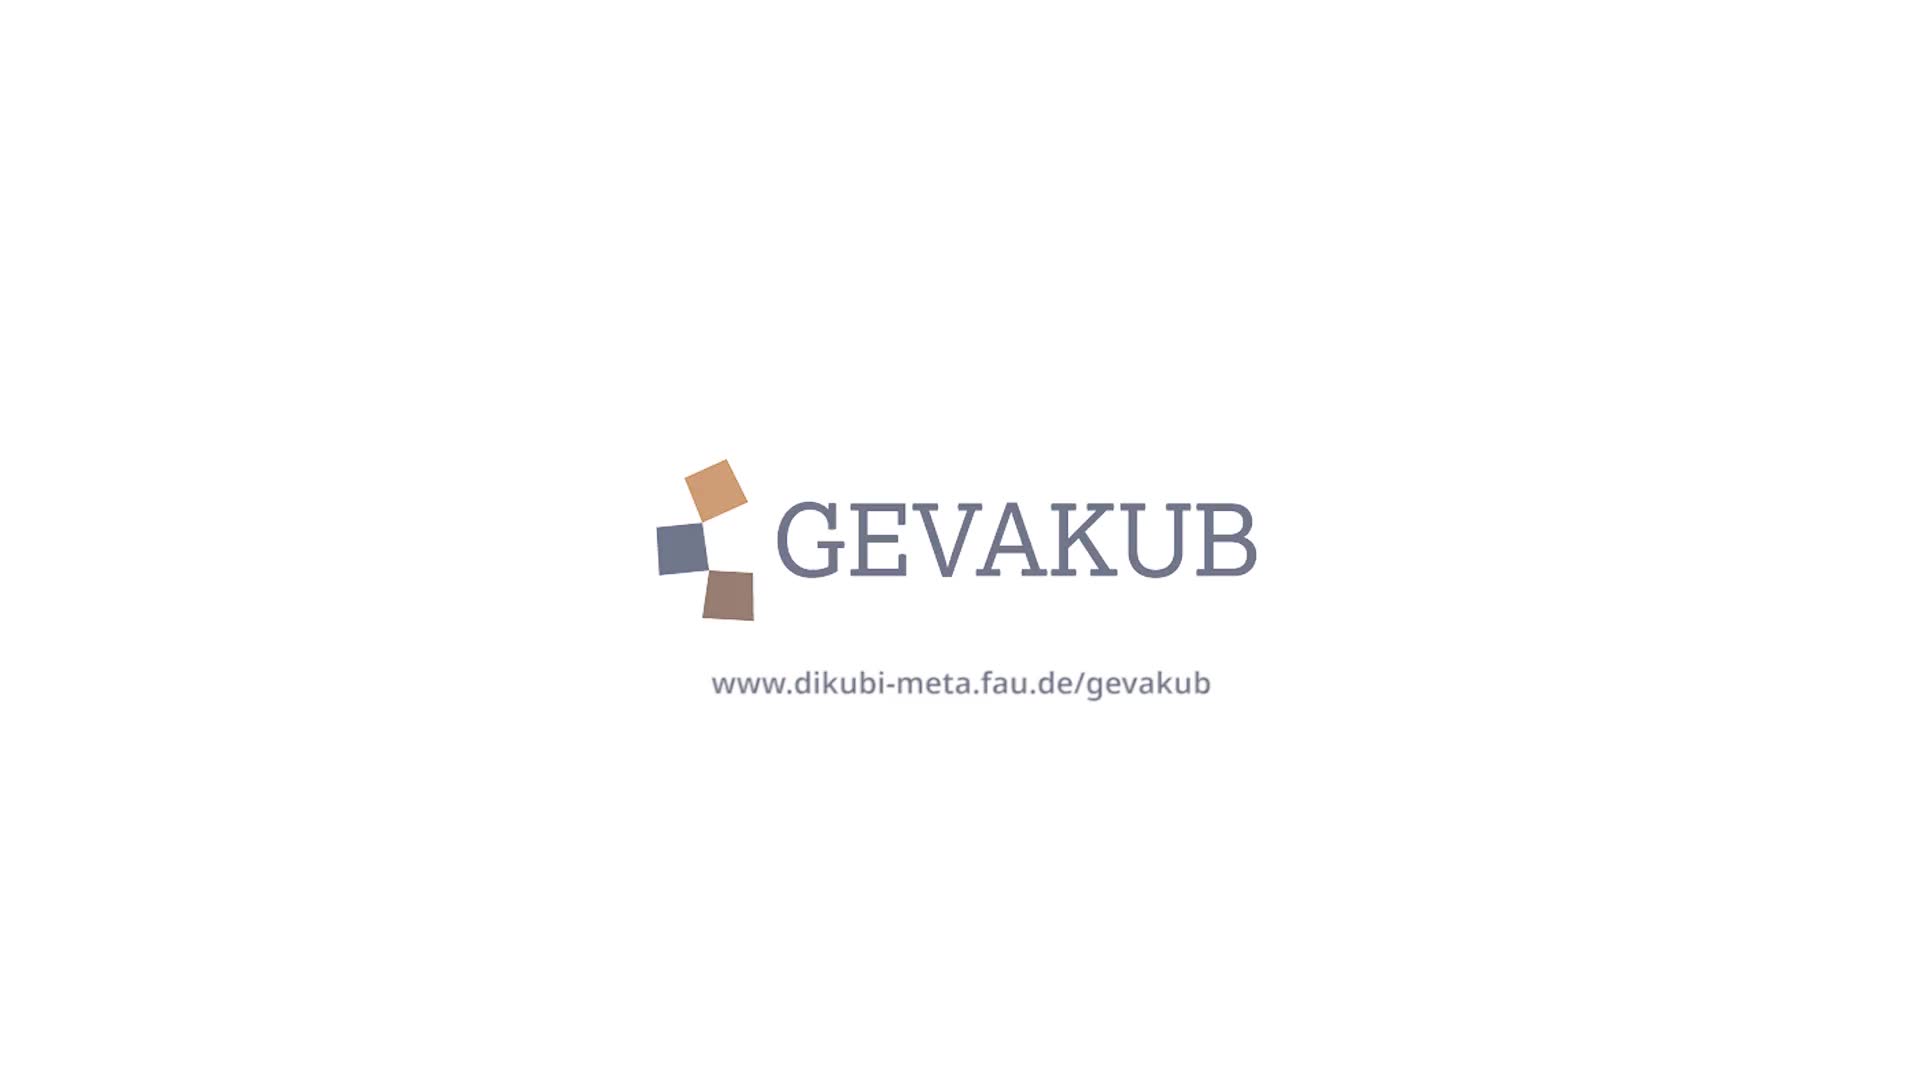 GEVAKUB preview image